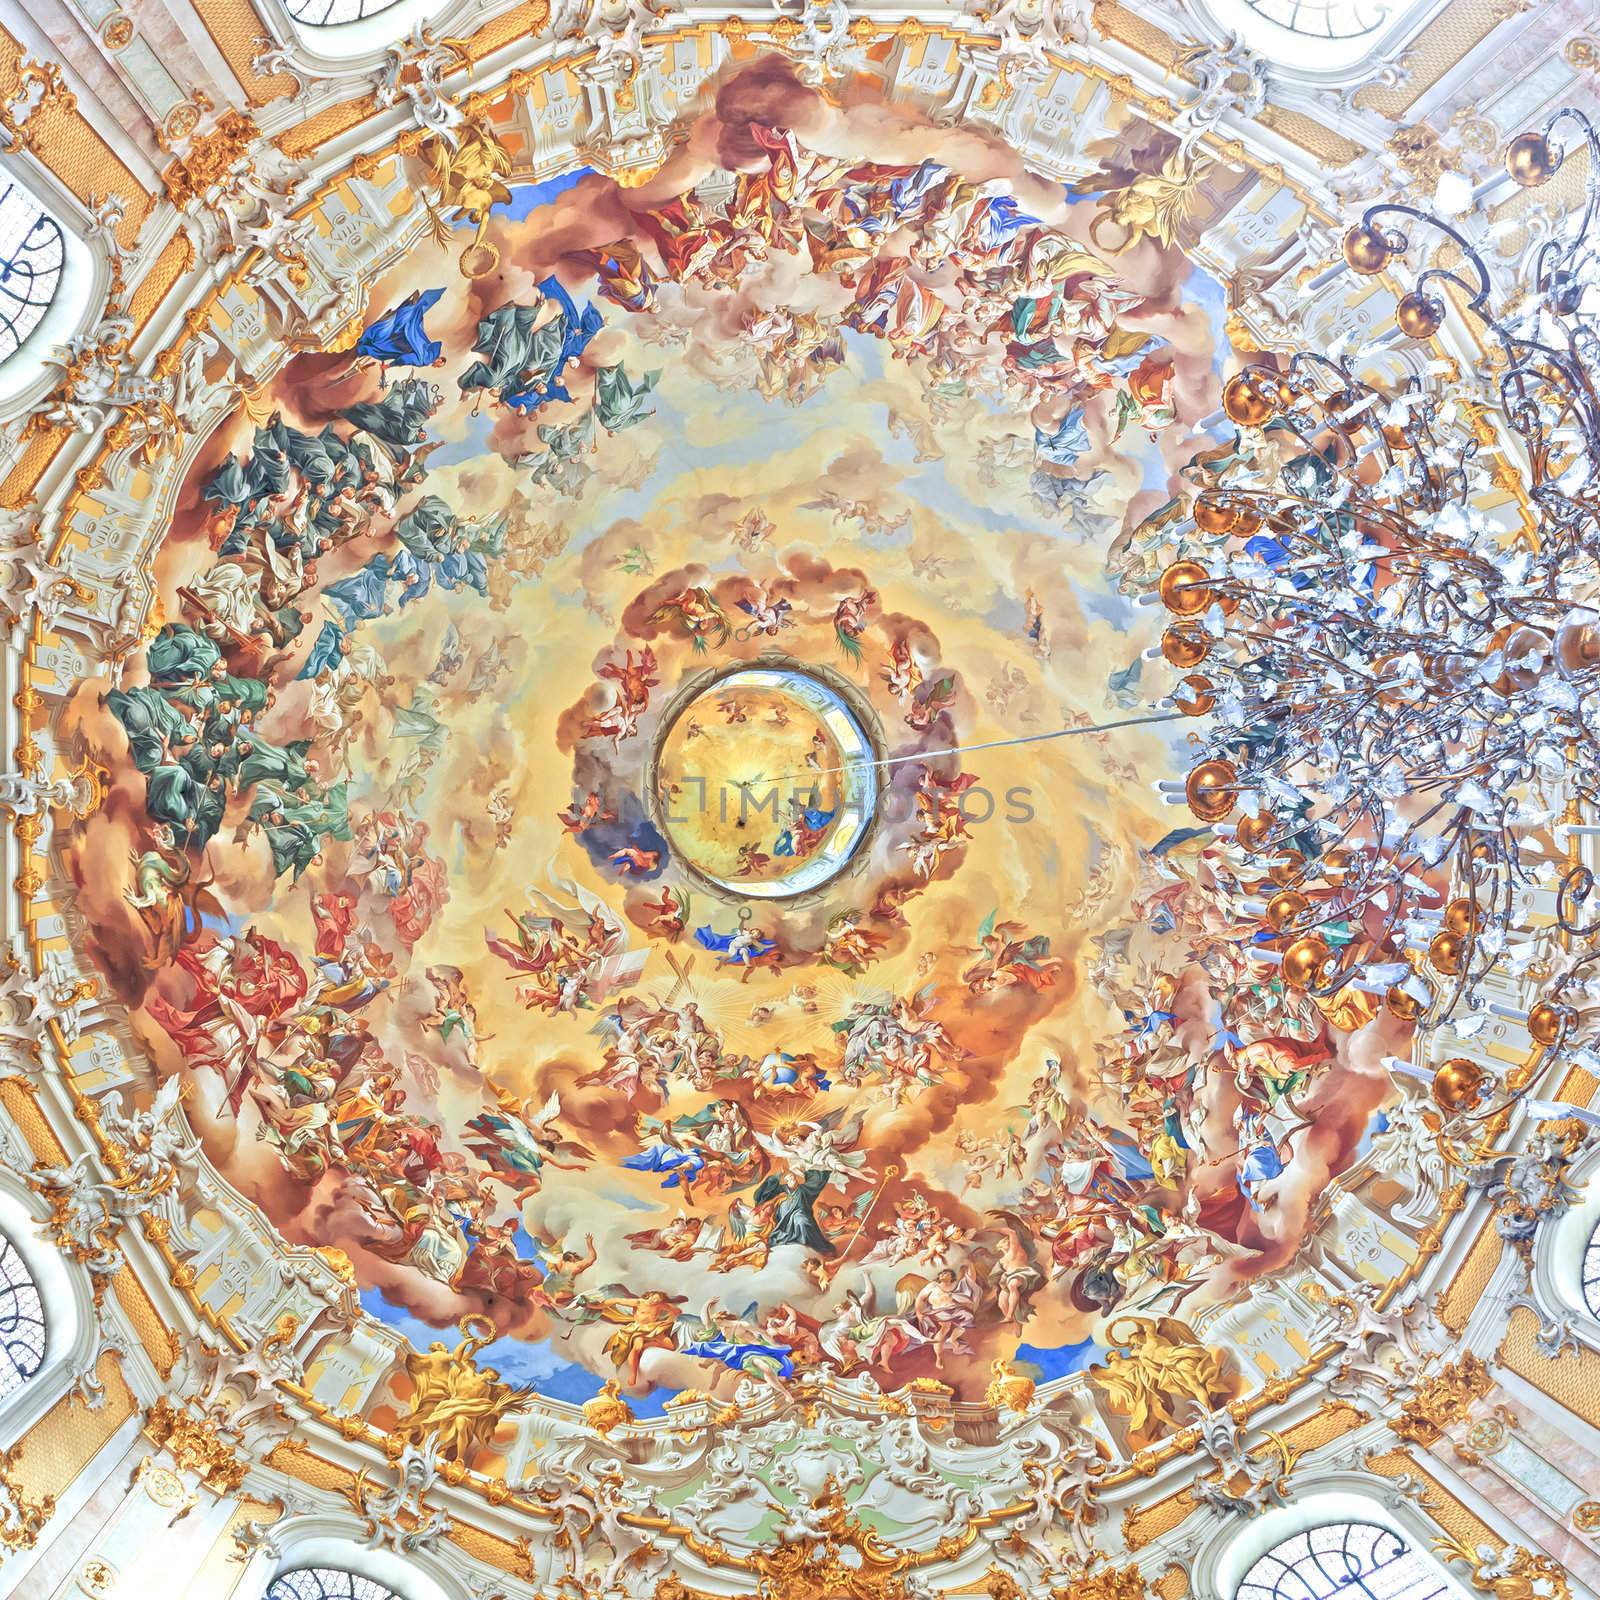 An image of a beautiful religious fresco